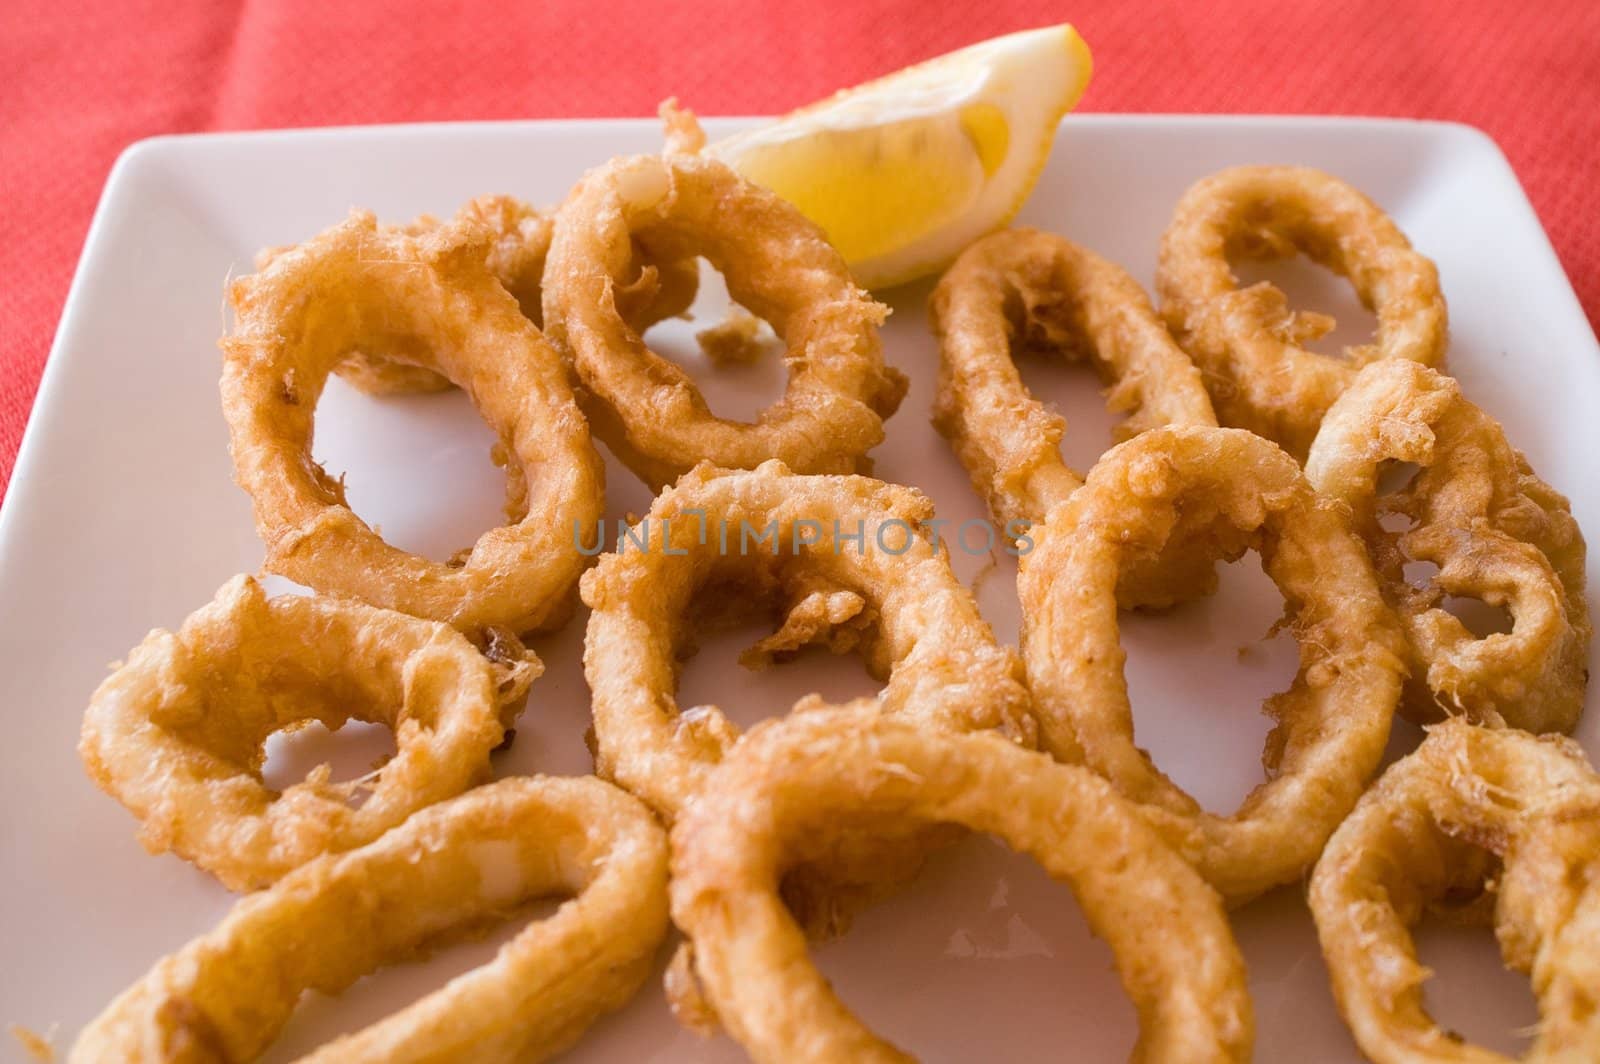  Seafood, Fried Calamari. by olgaolga